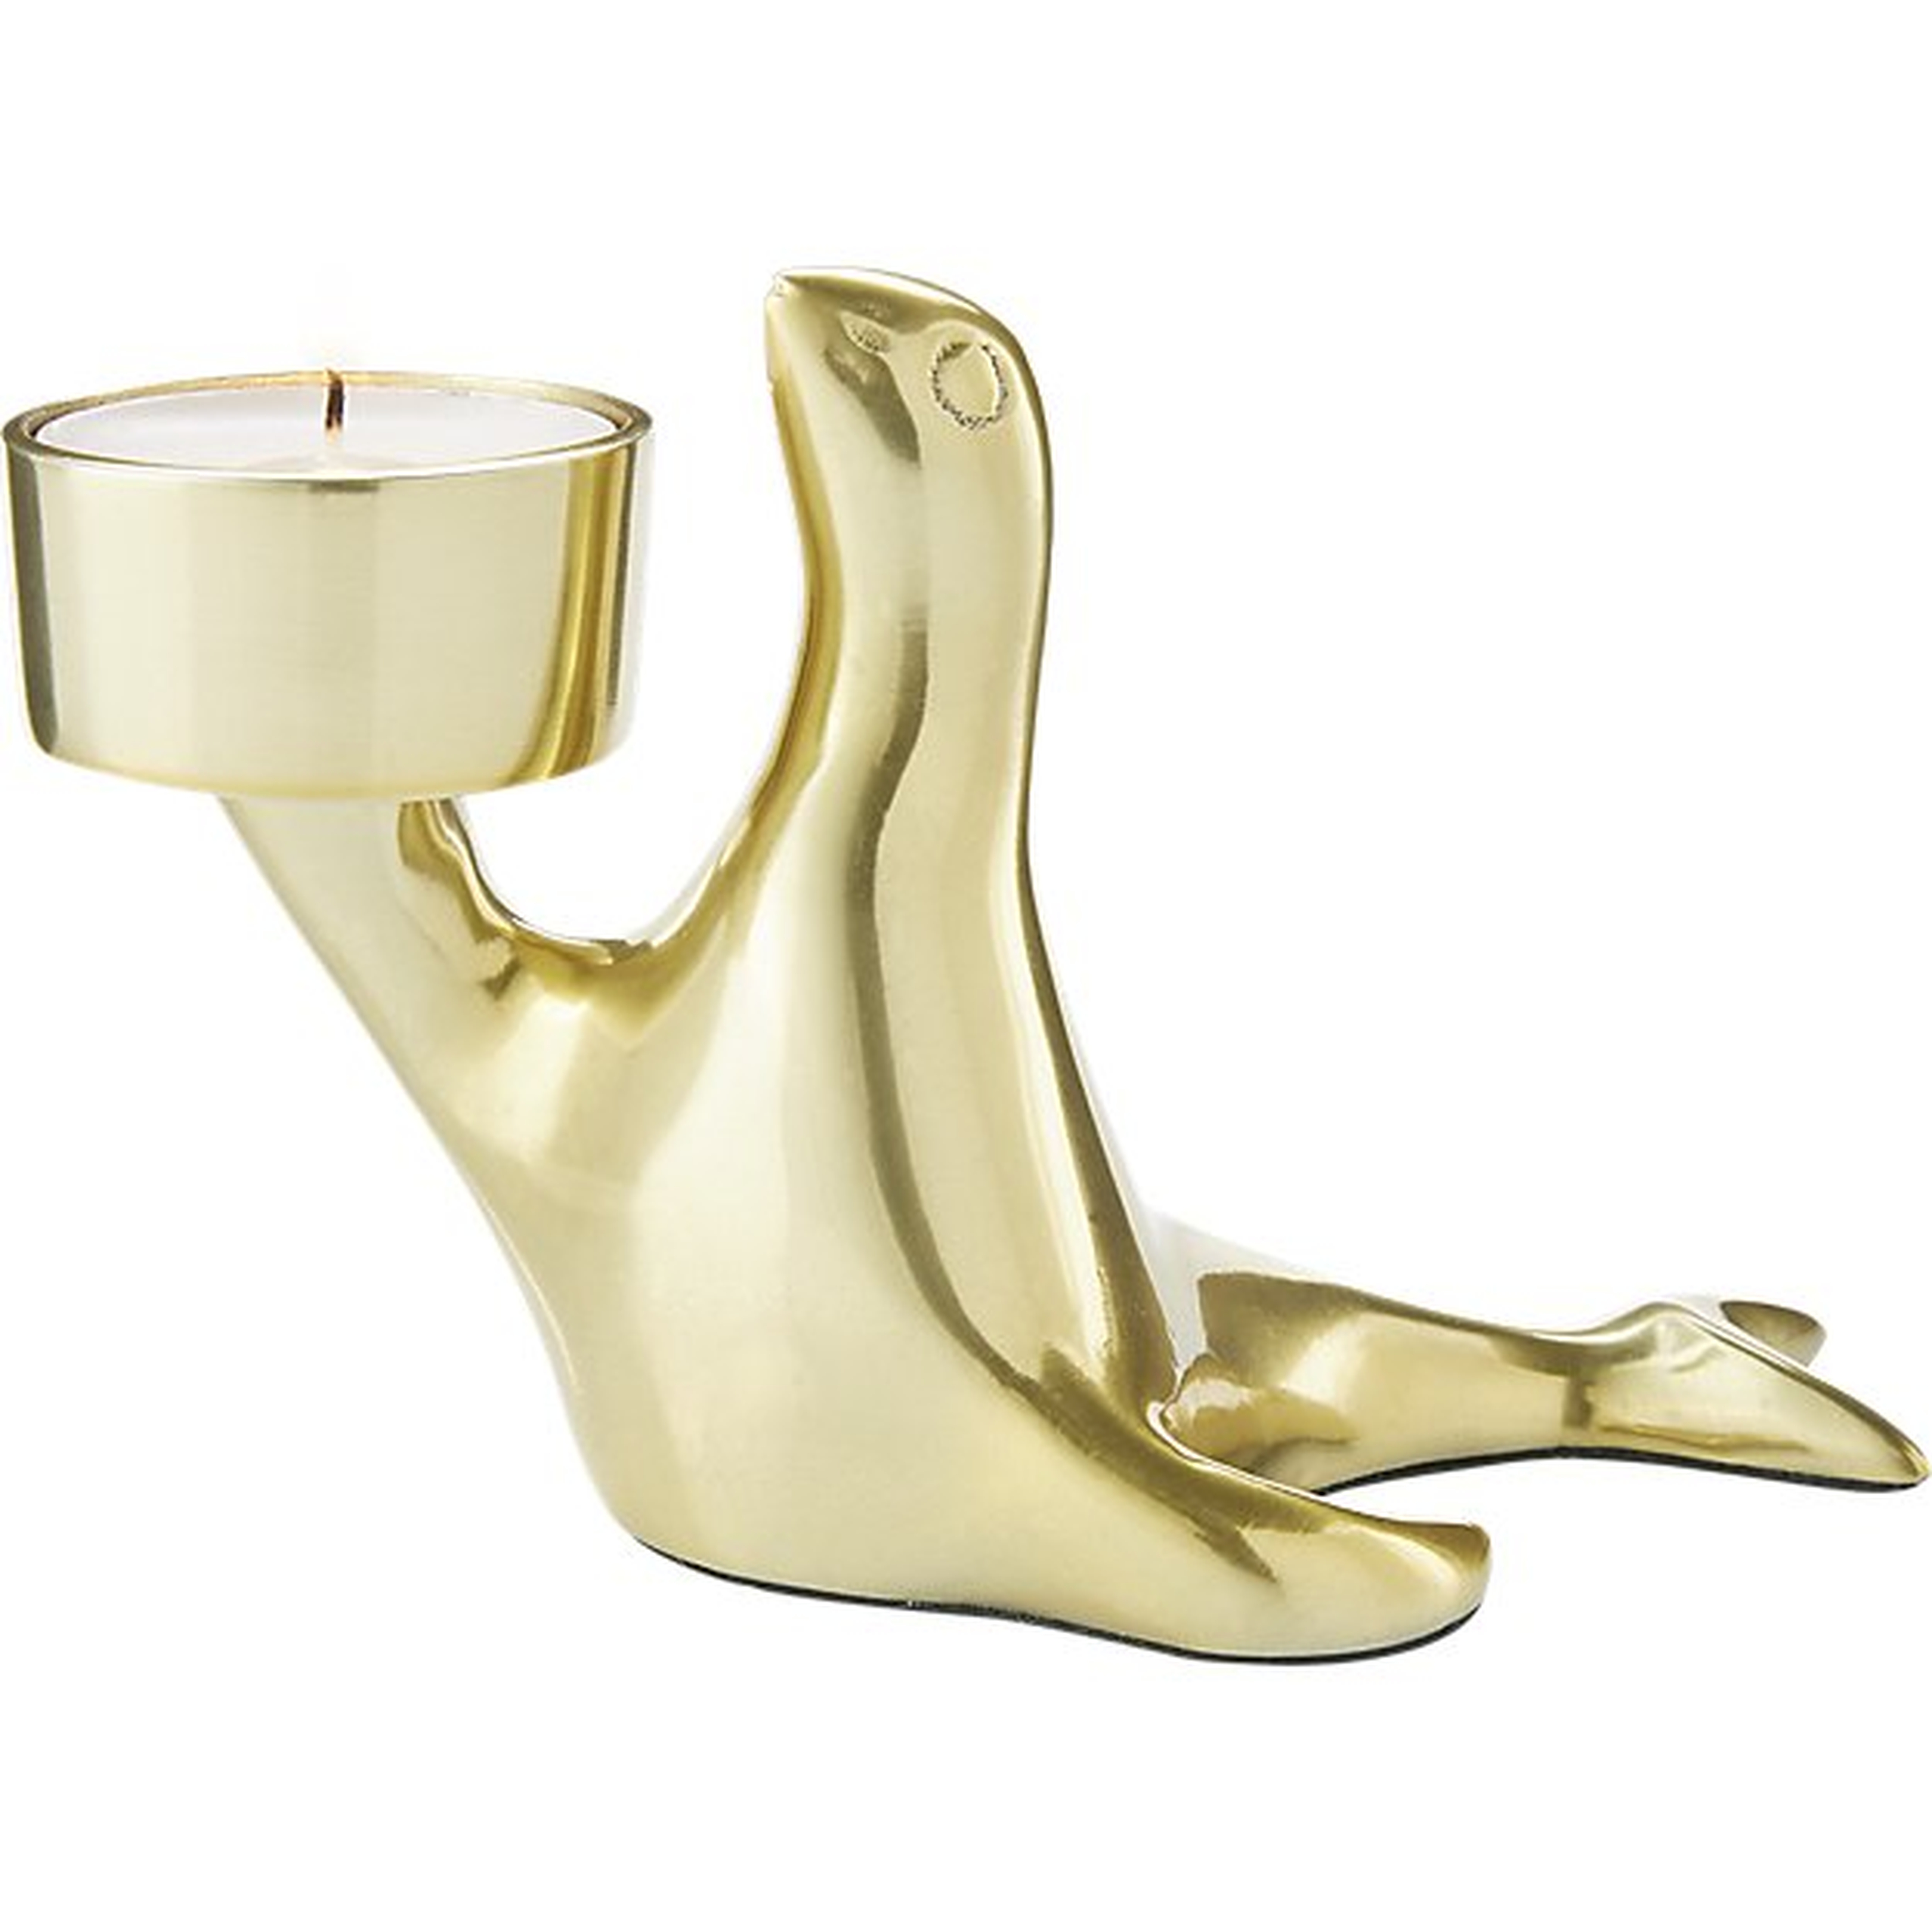 Henry seal brass tea light candle holder - CB2